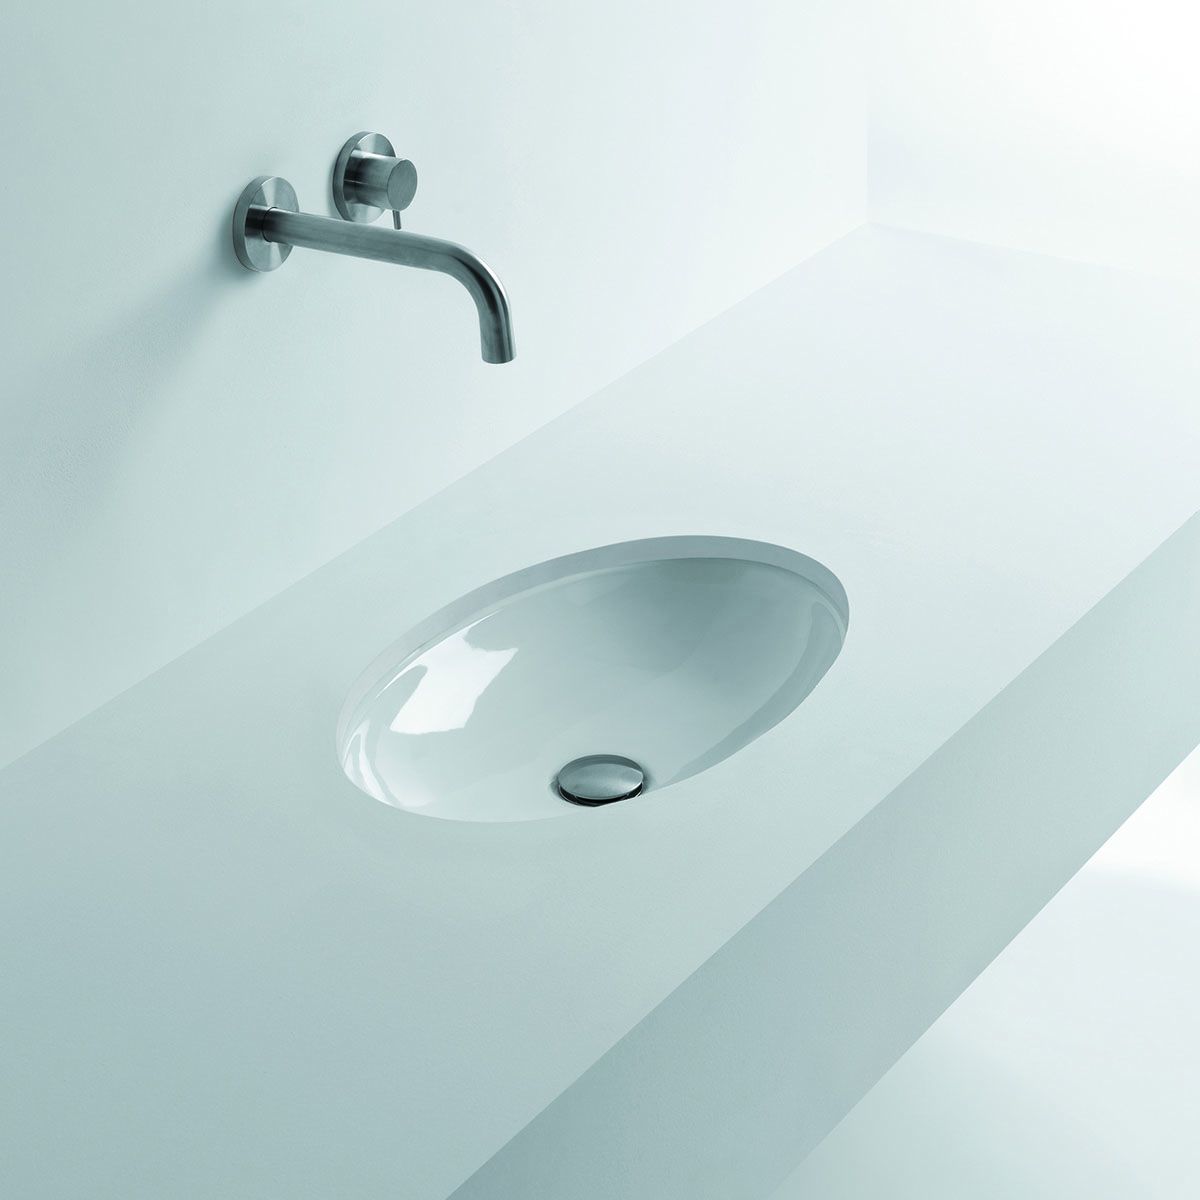 Cons of Undermount Bathroom Sinks - H10 Undermount Bathroom Sink